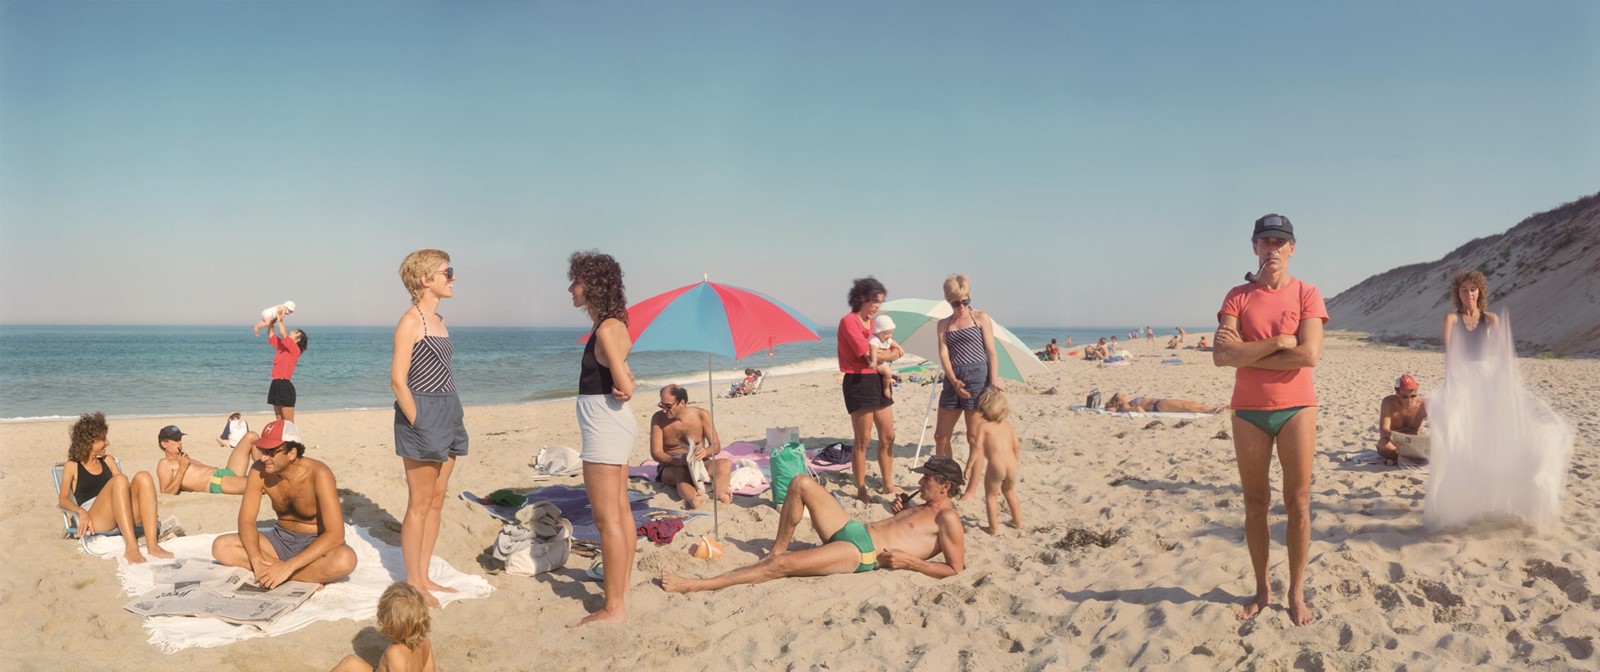 16_longnook_beach_truro_massachusetts_1983